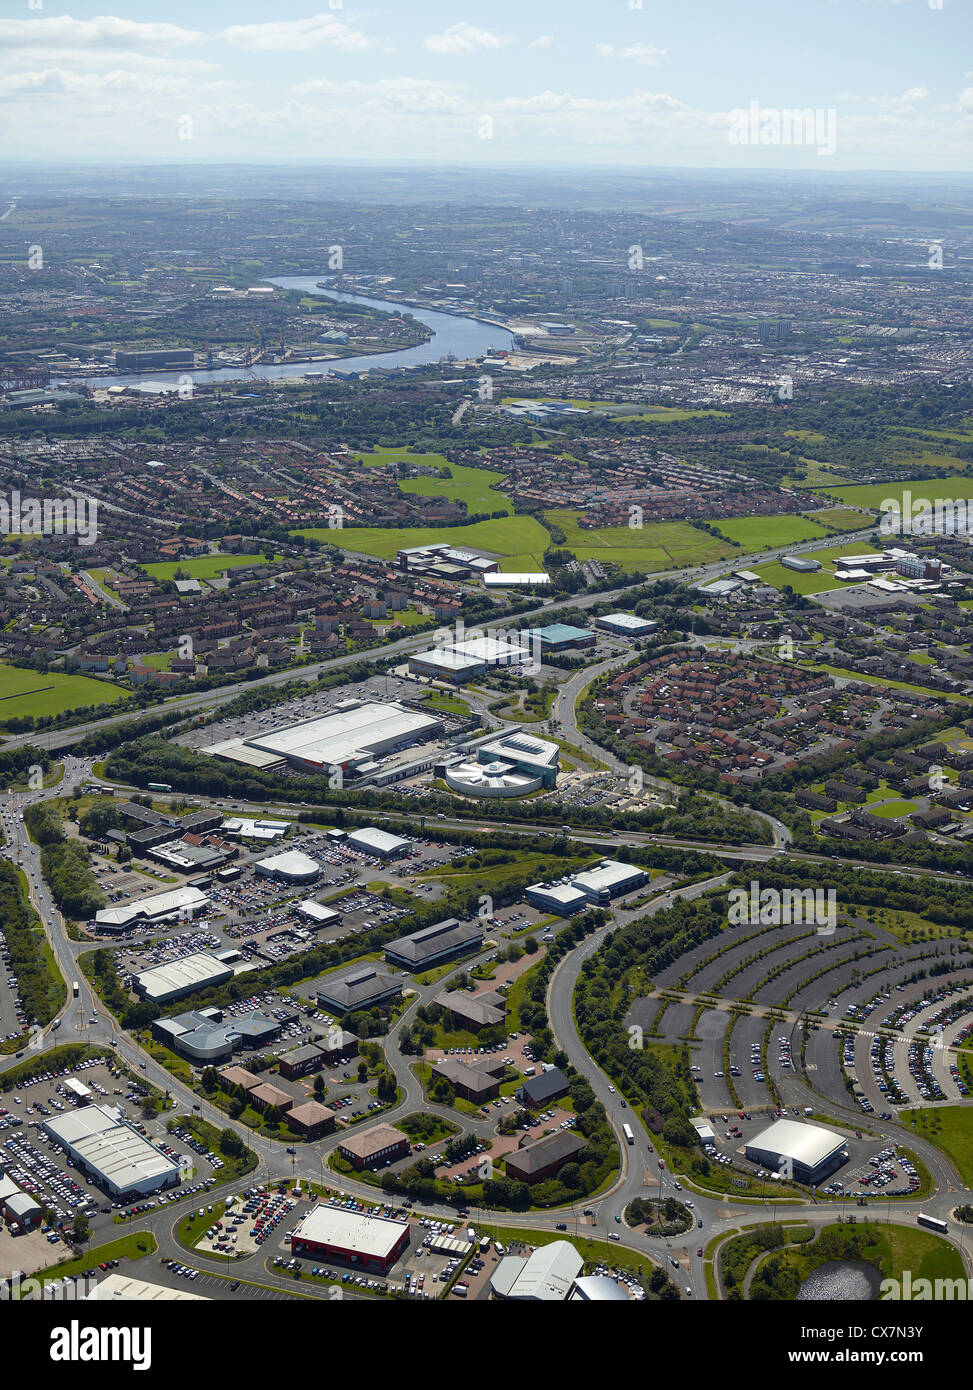 Silverlink area business, Newcastle upon Tyne, nel nord est dell'Inghilterra, Regno Unito, fiume Tyne visibile in background Foto Stock